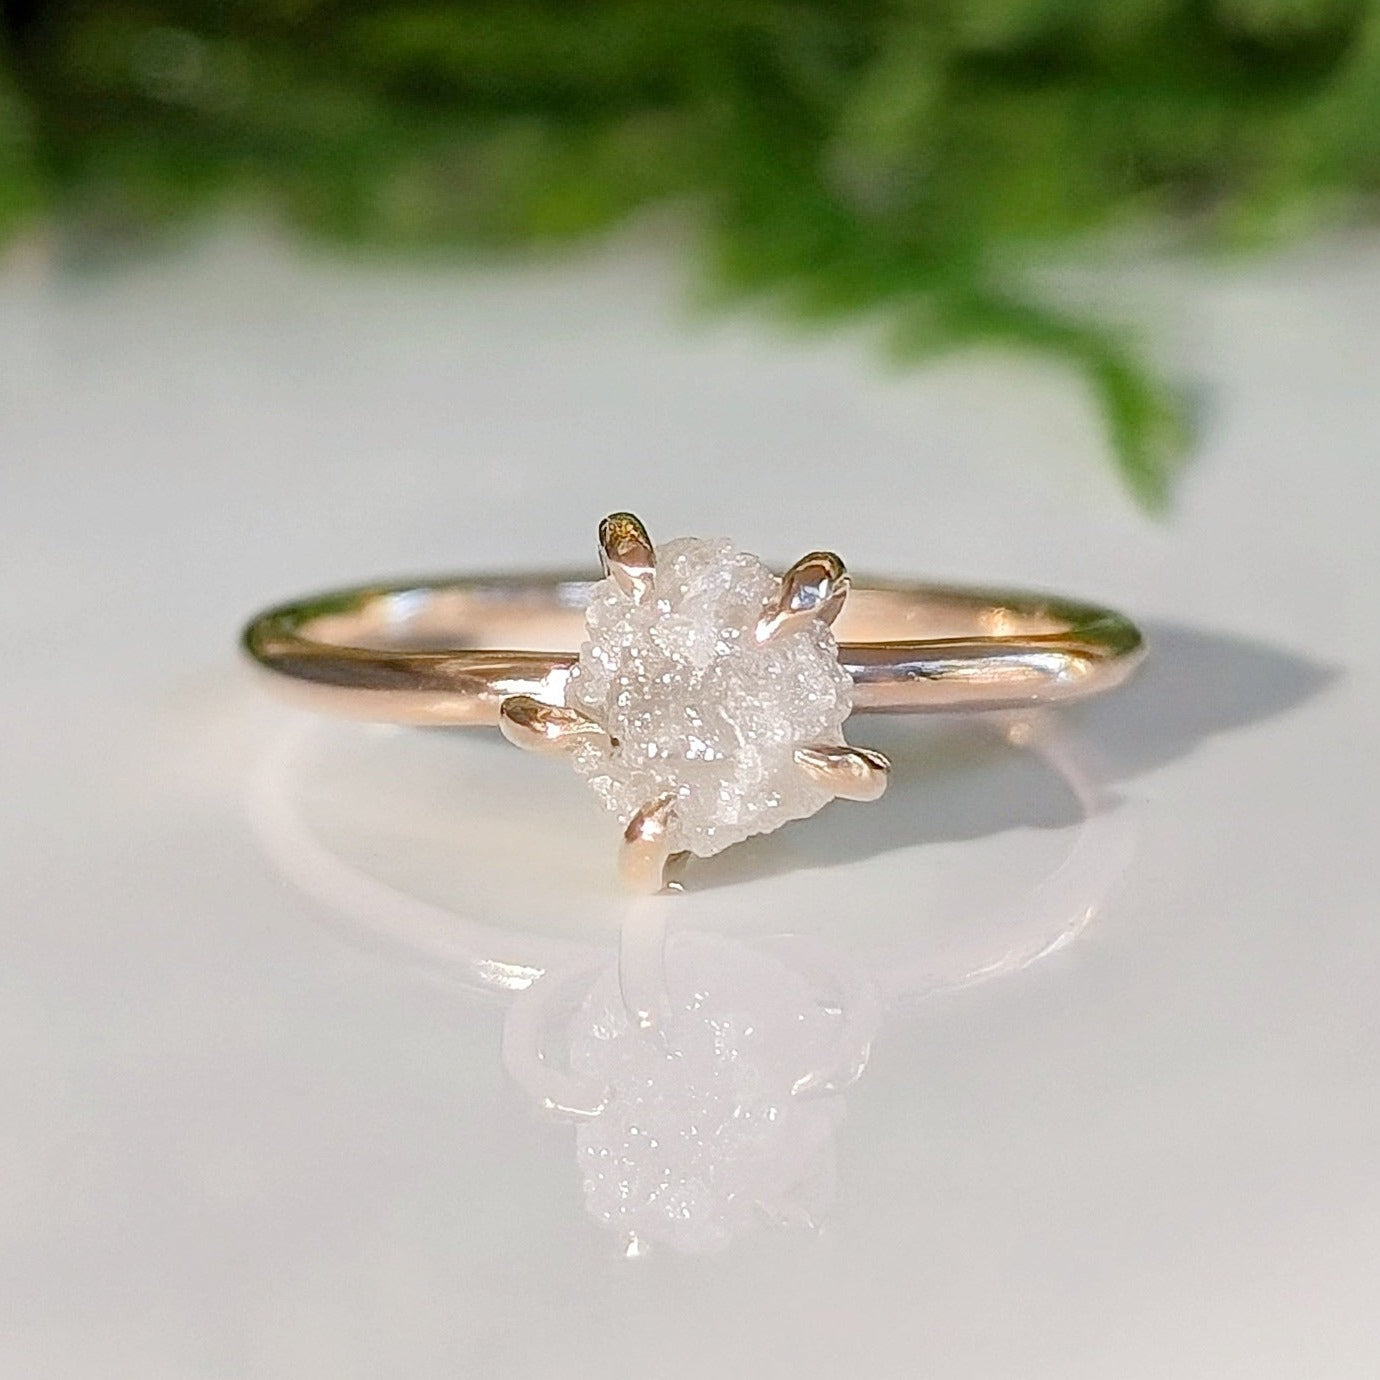 Raw diamond engagement ring - Rough uncut solitaire diamond ring